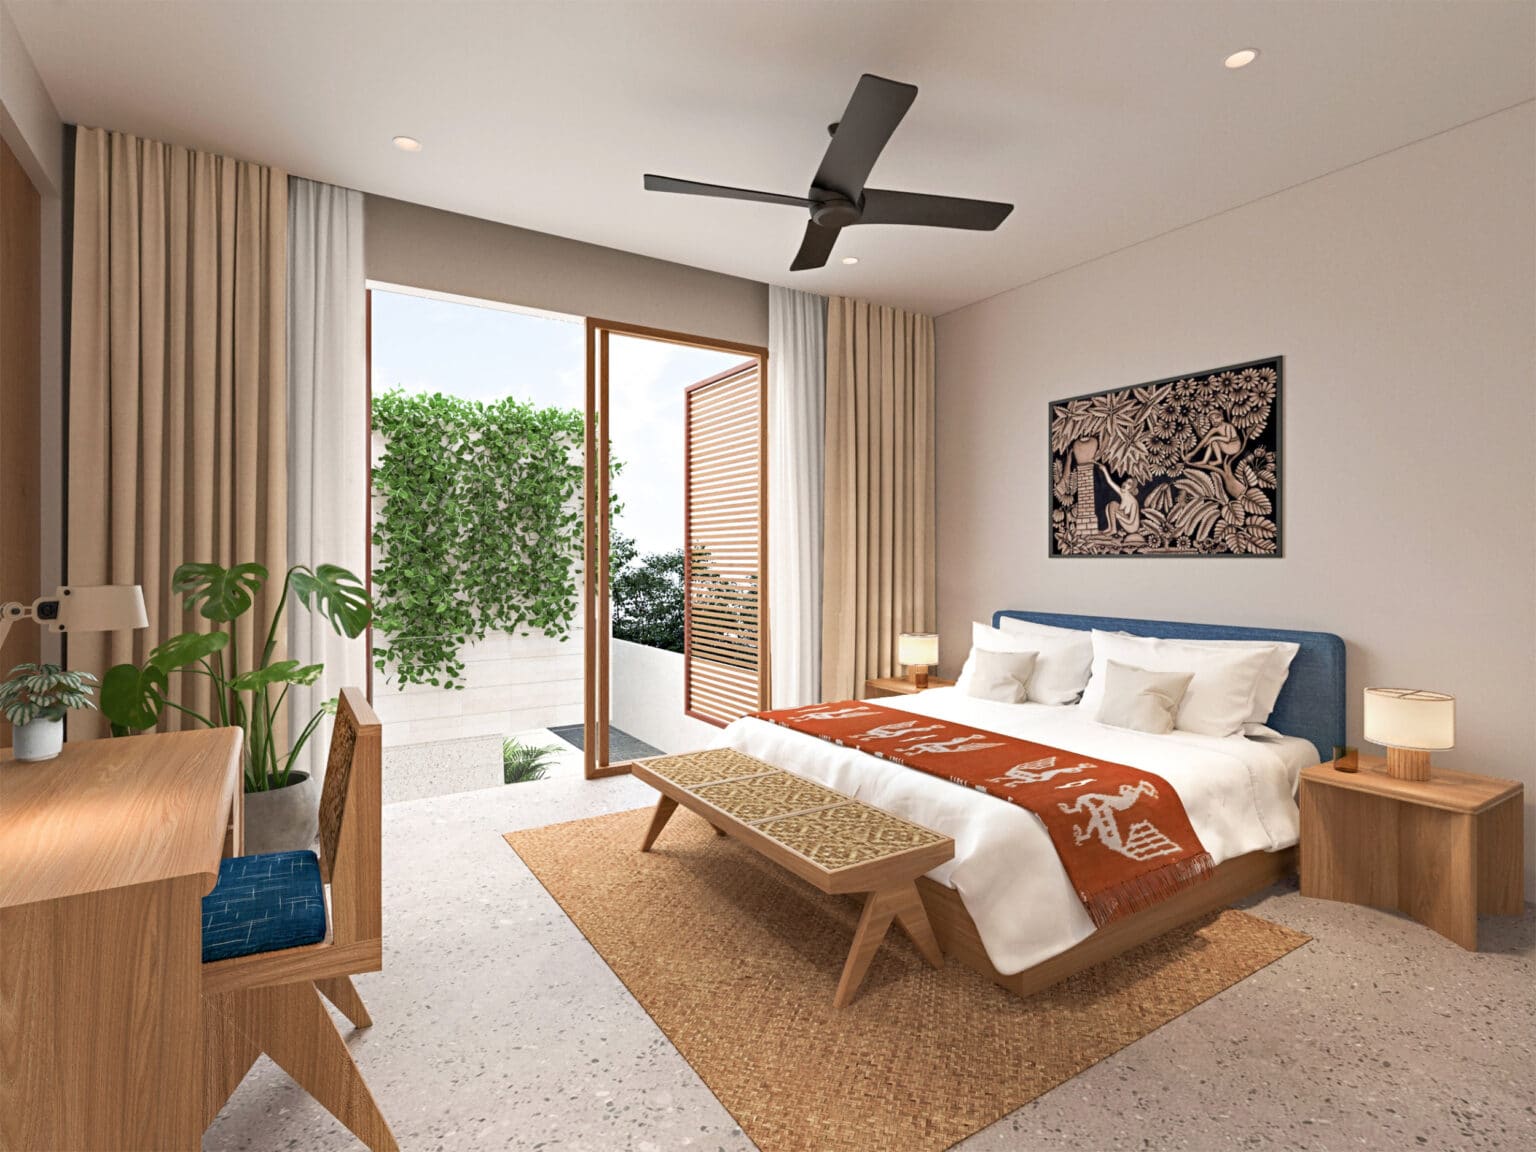 Design Assembly - Suku House - Bali Architect - Interior Design - Bali Villa - Bedroom - Wooden Facade - Desk